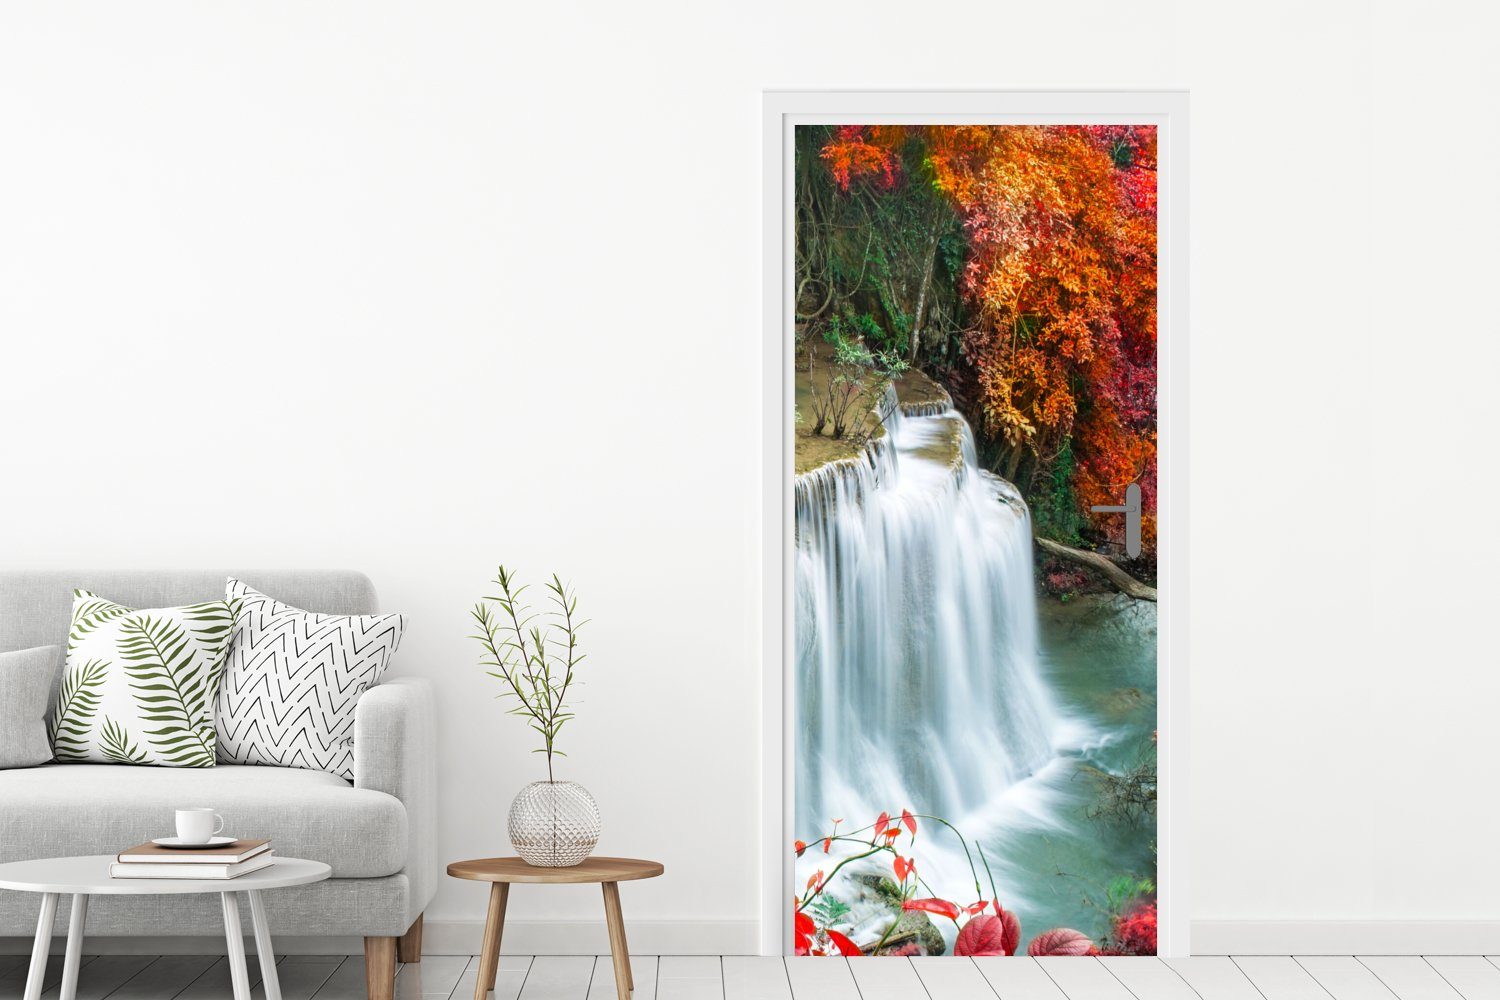 75x205 Fototapete Wasserfall - Natur, - St), Türaufkleber, (1 MuchoWow Bäume - Tür, cm Türtapete Matt, bedruckt, Herbst für